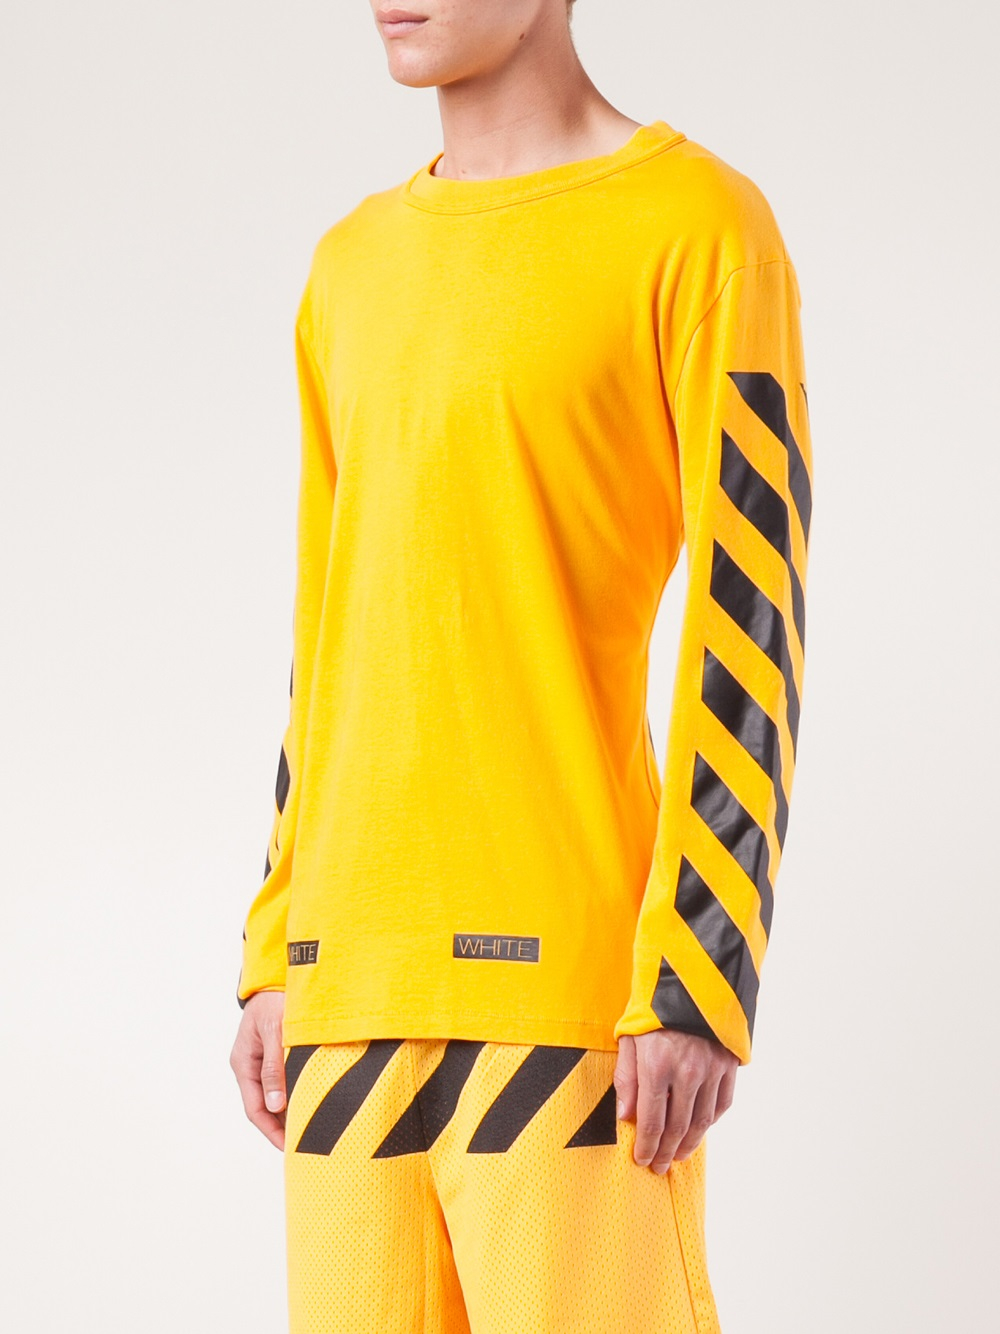 Off-White c/o Virgil Abloh Long Sleeve T-Shirt in Yellow for Men